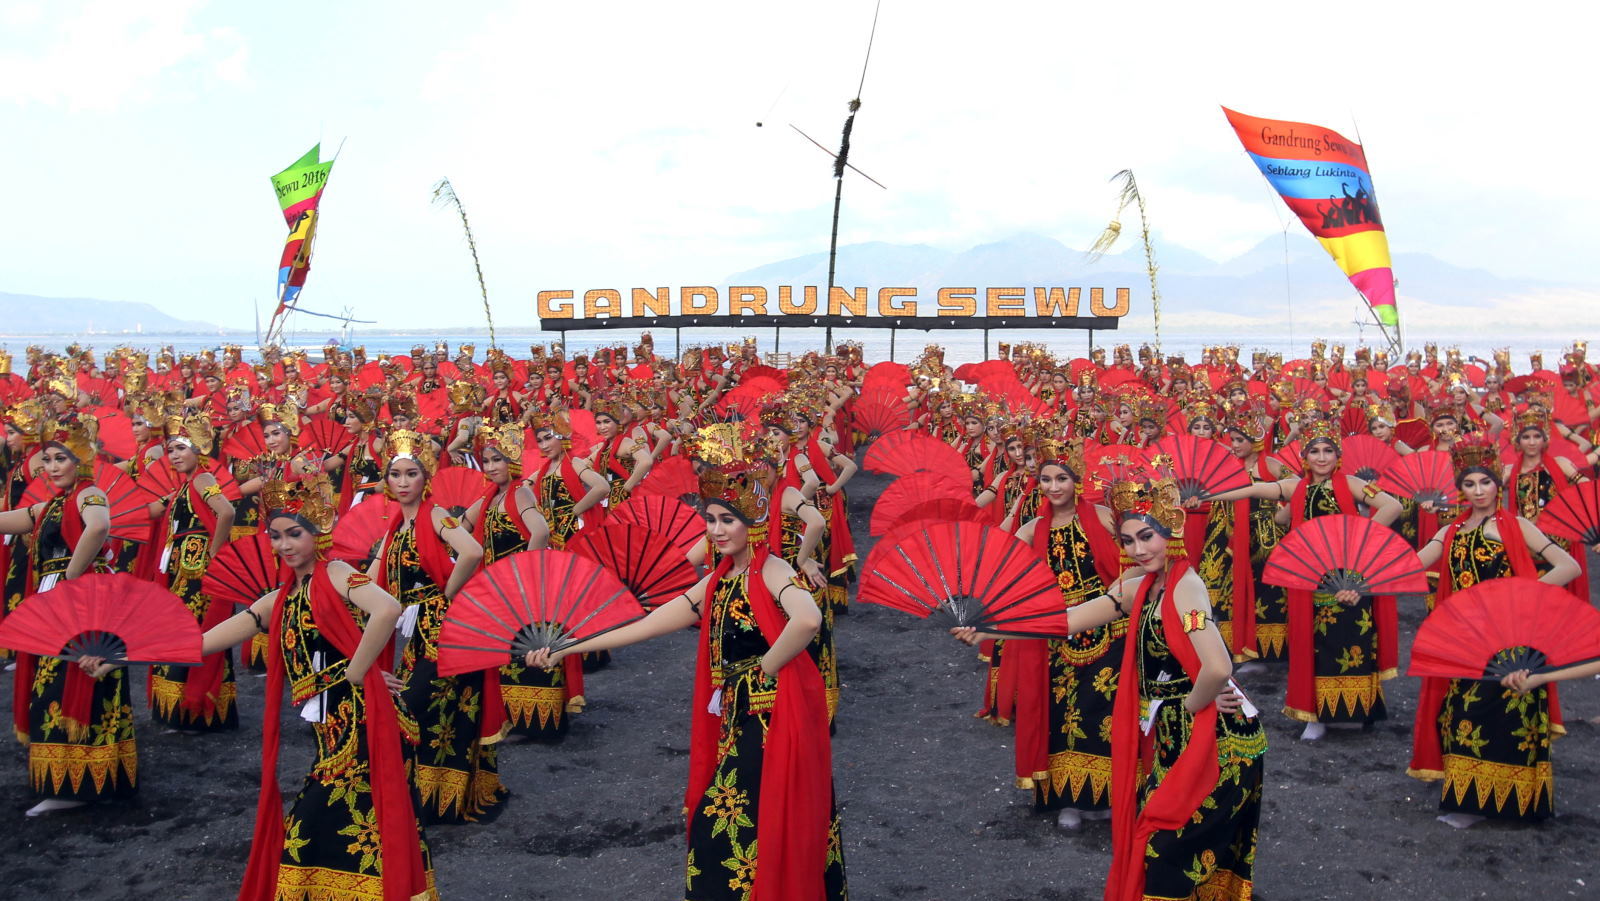 Gelaran Festival Sewu Gandrung Banyuwangi